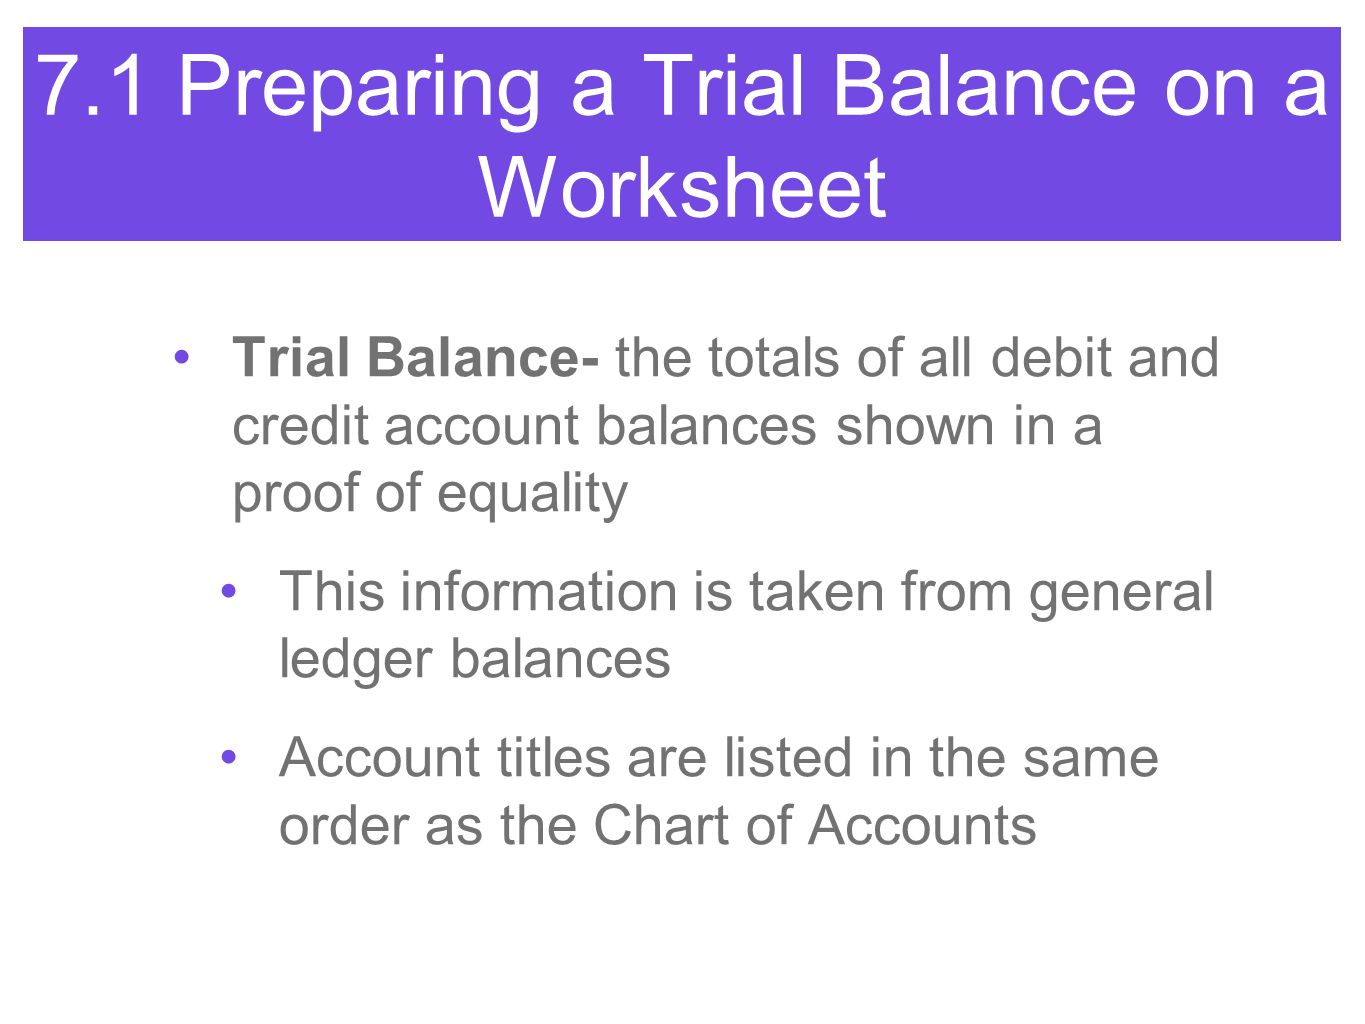 7.1 Preparing a Trial Balance on a Worksheet